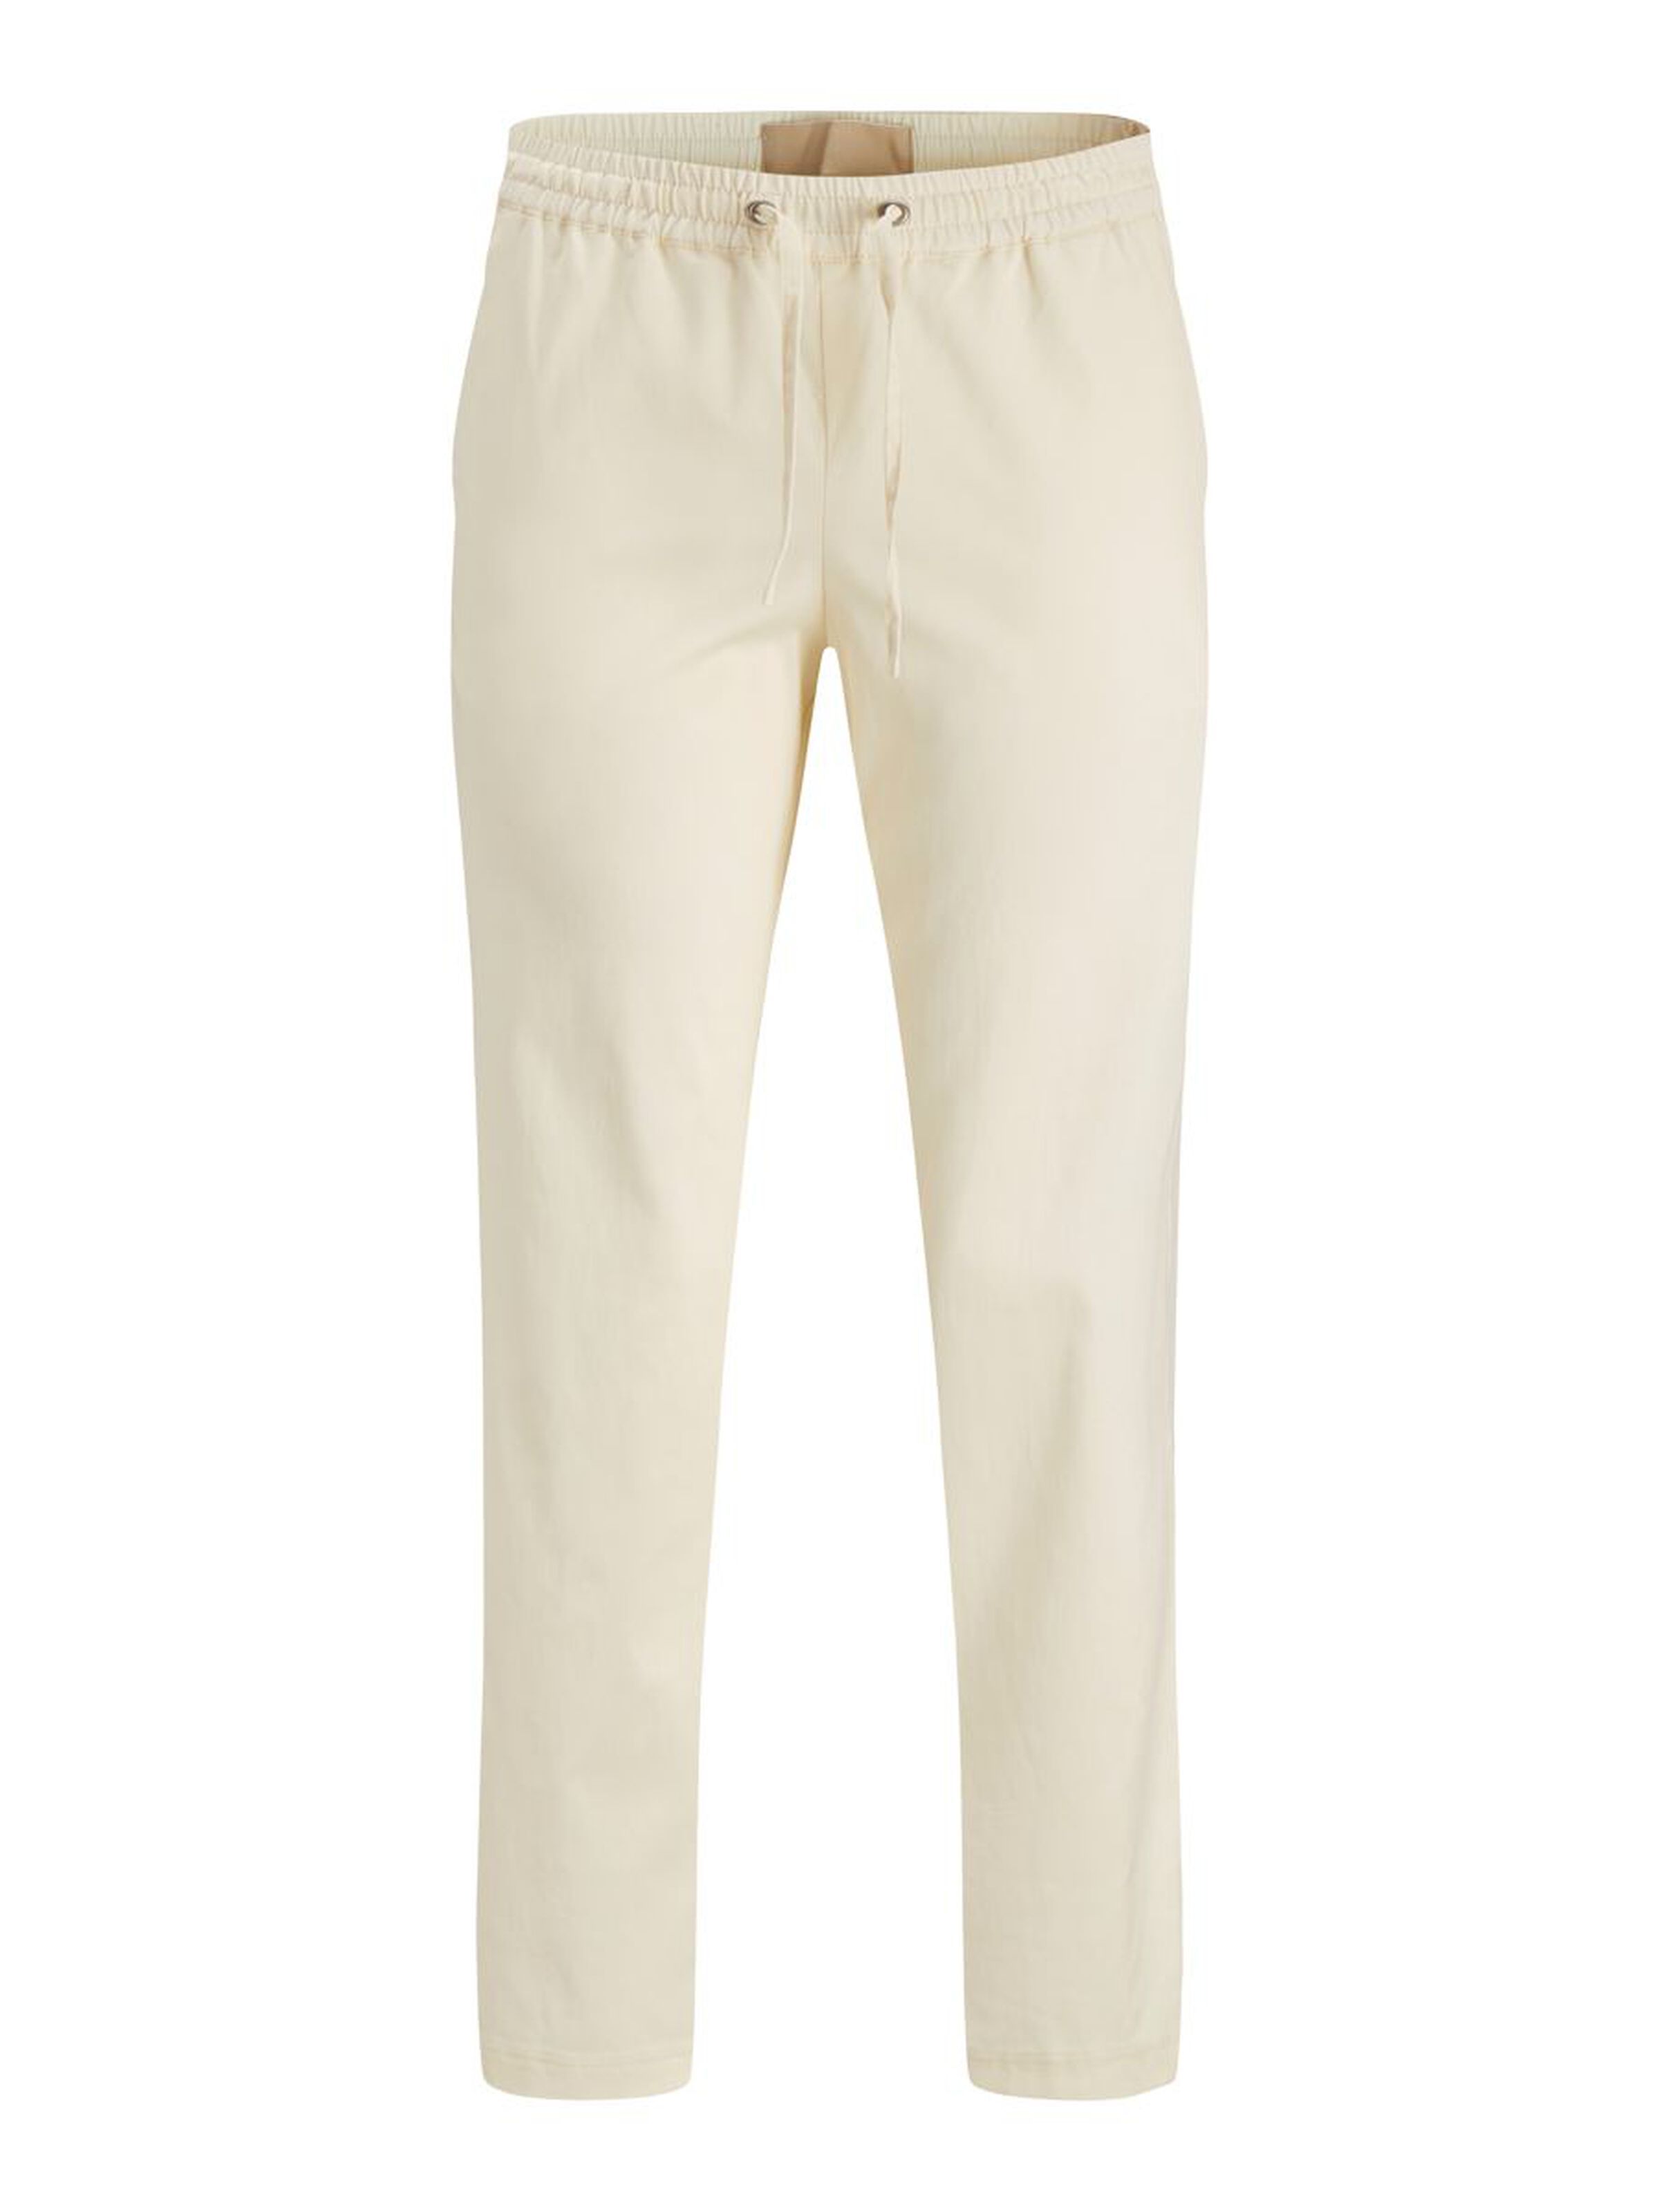 Jxalva regular string trousers - white/vanilla ice